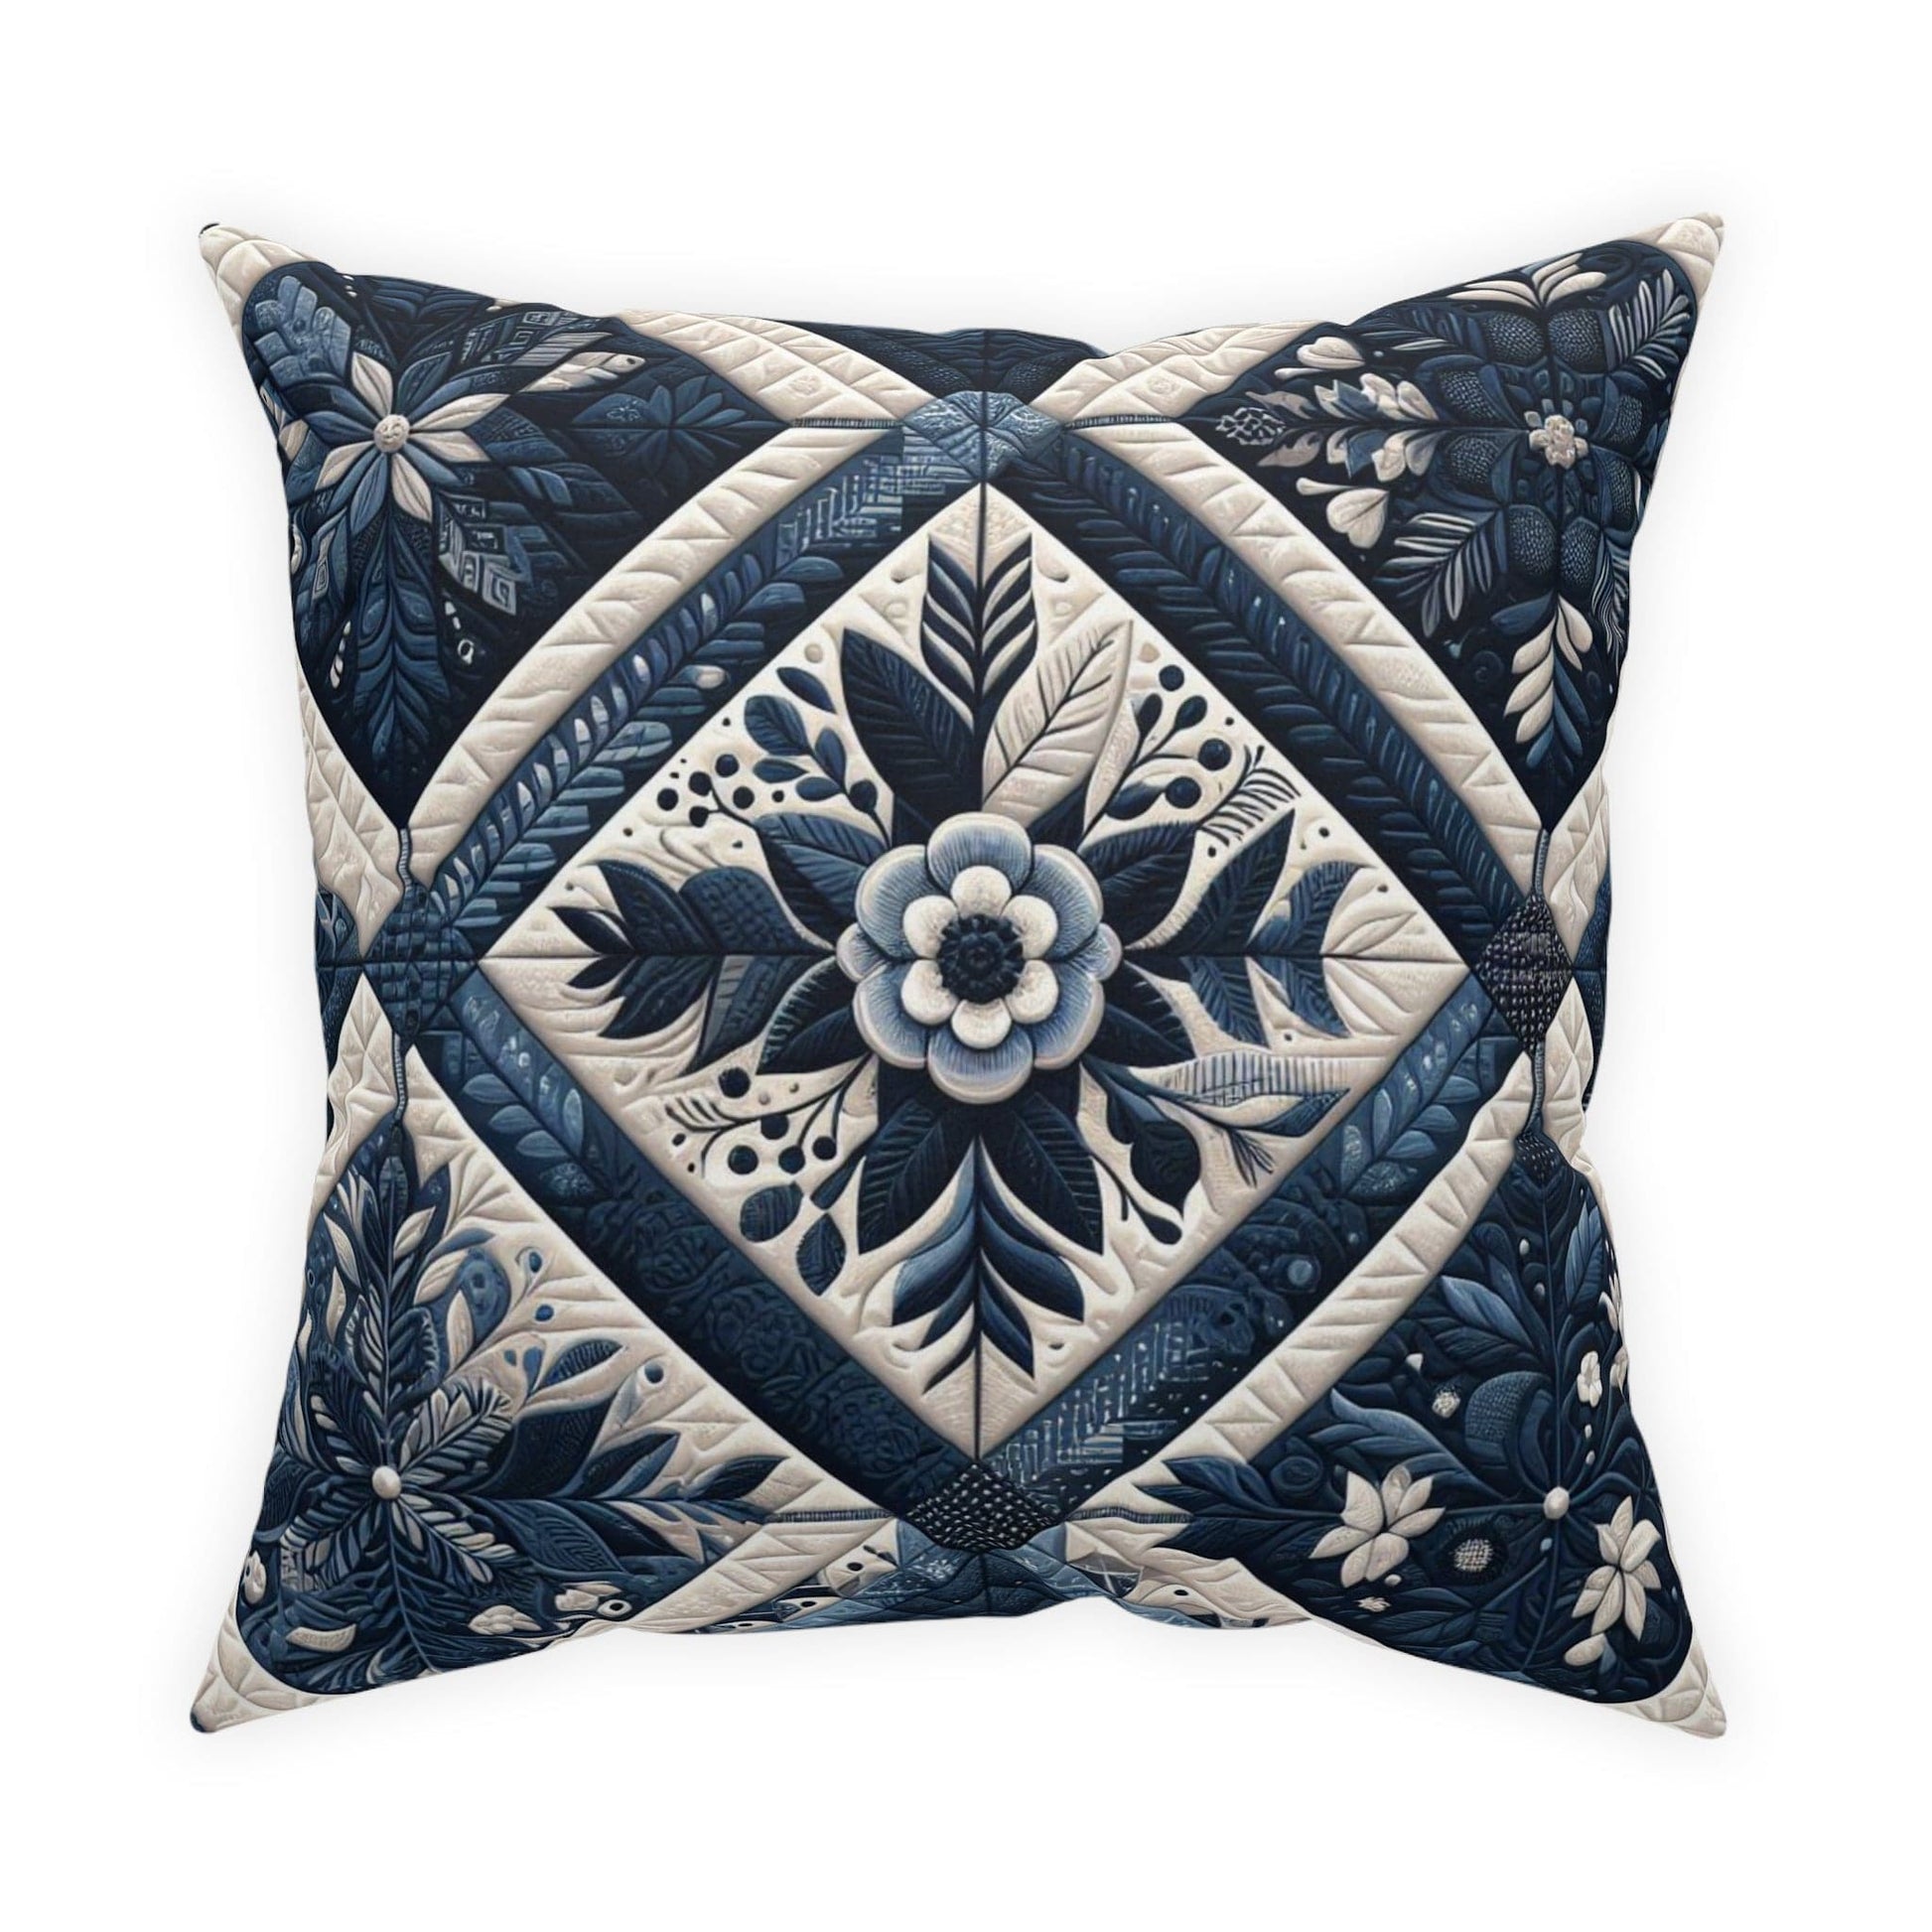 throw-pillow-quilt-pattern-home-decor